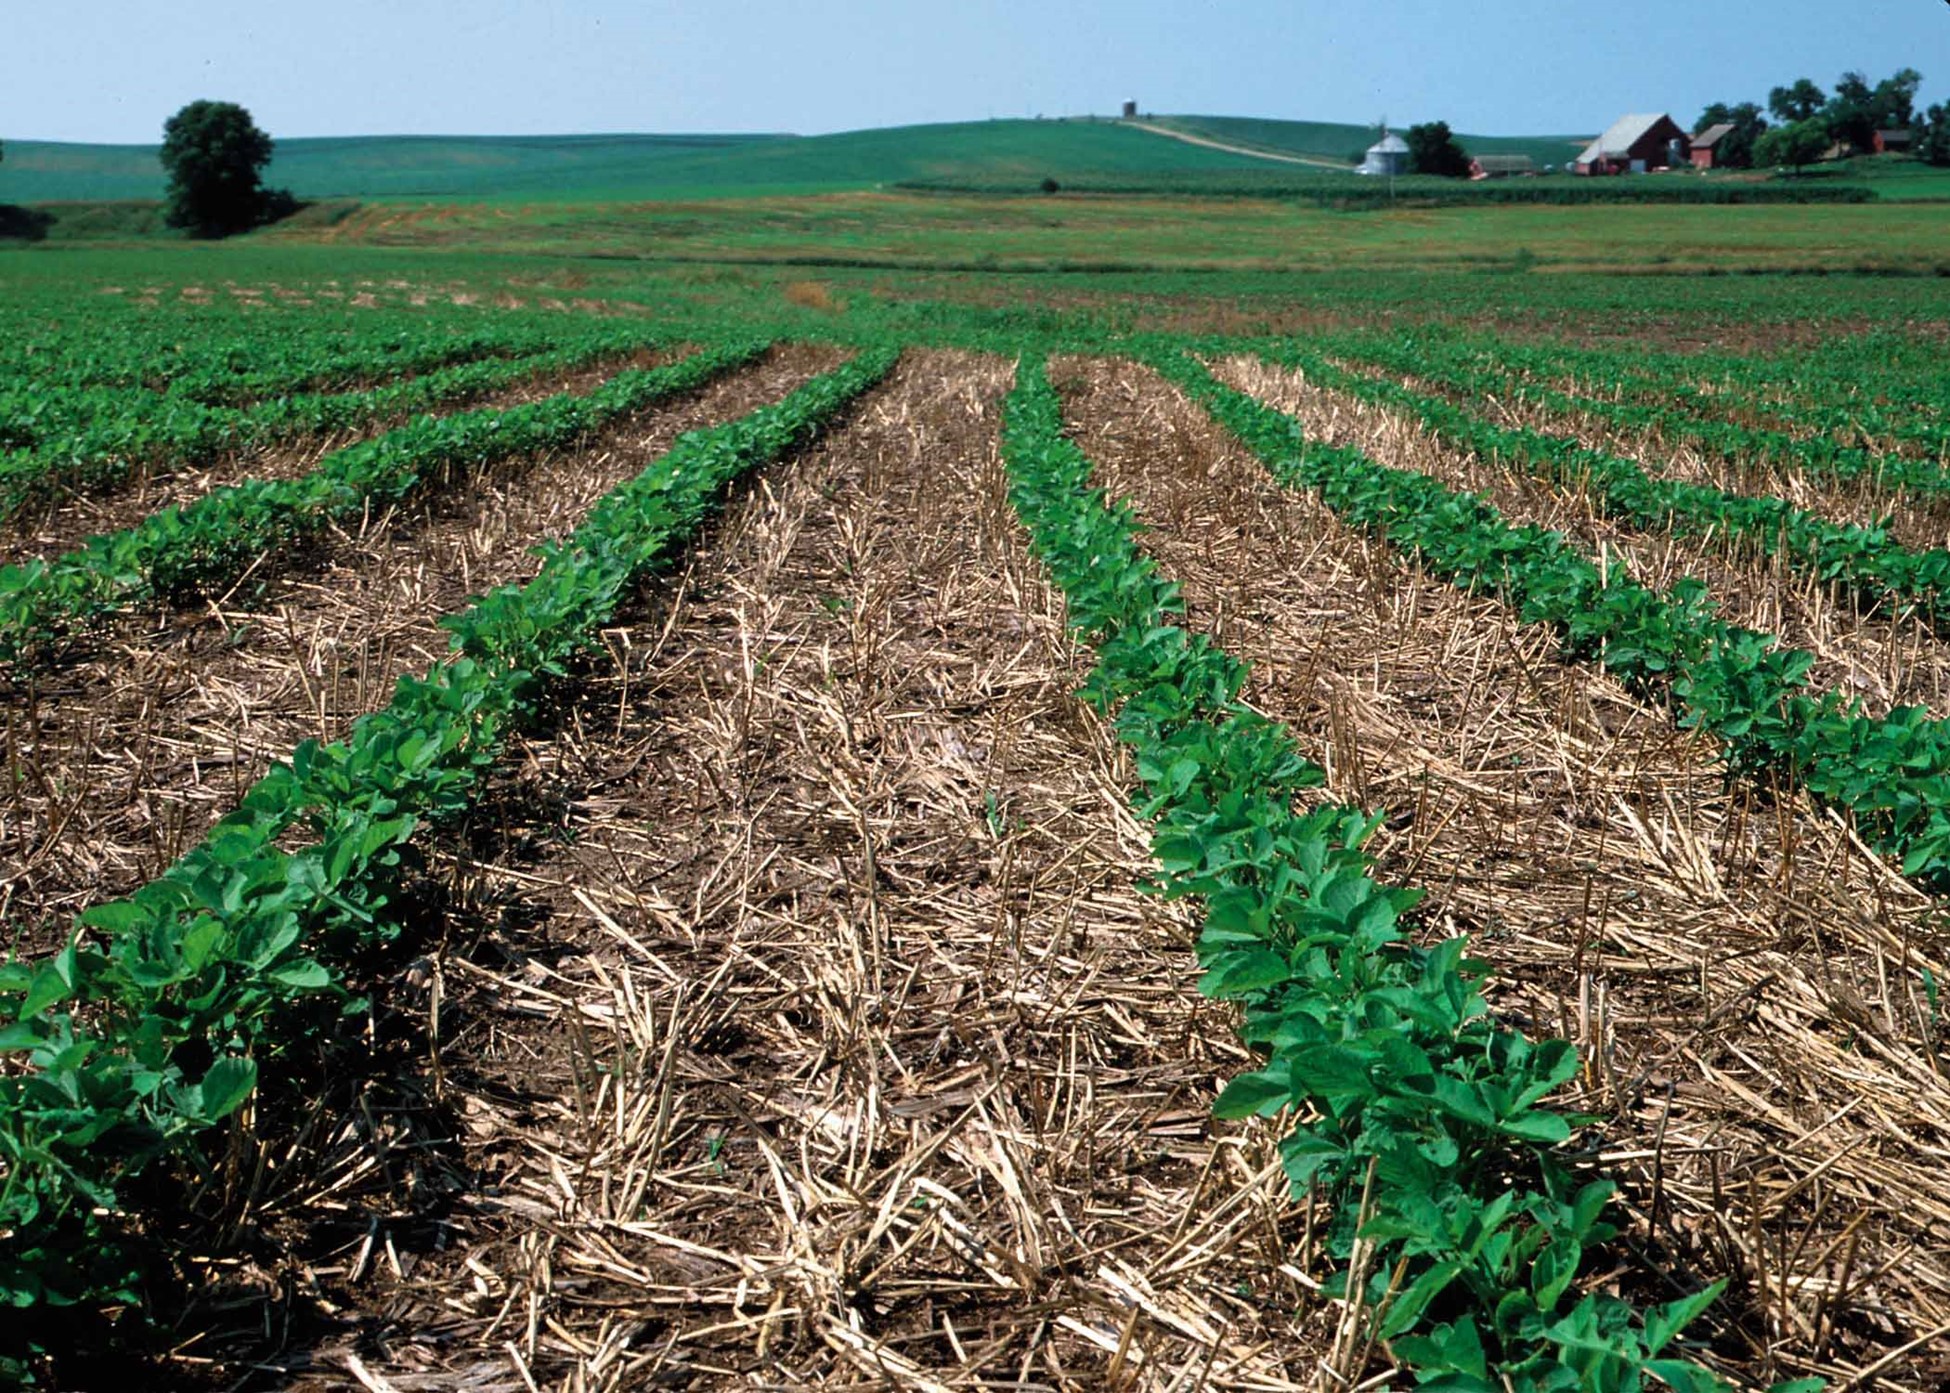 Covered soil in Iowa field